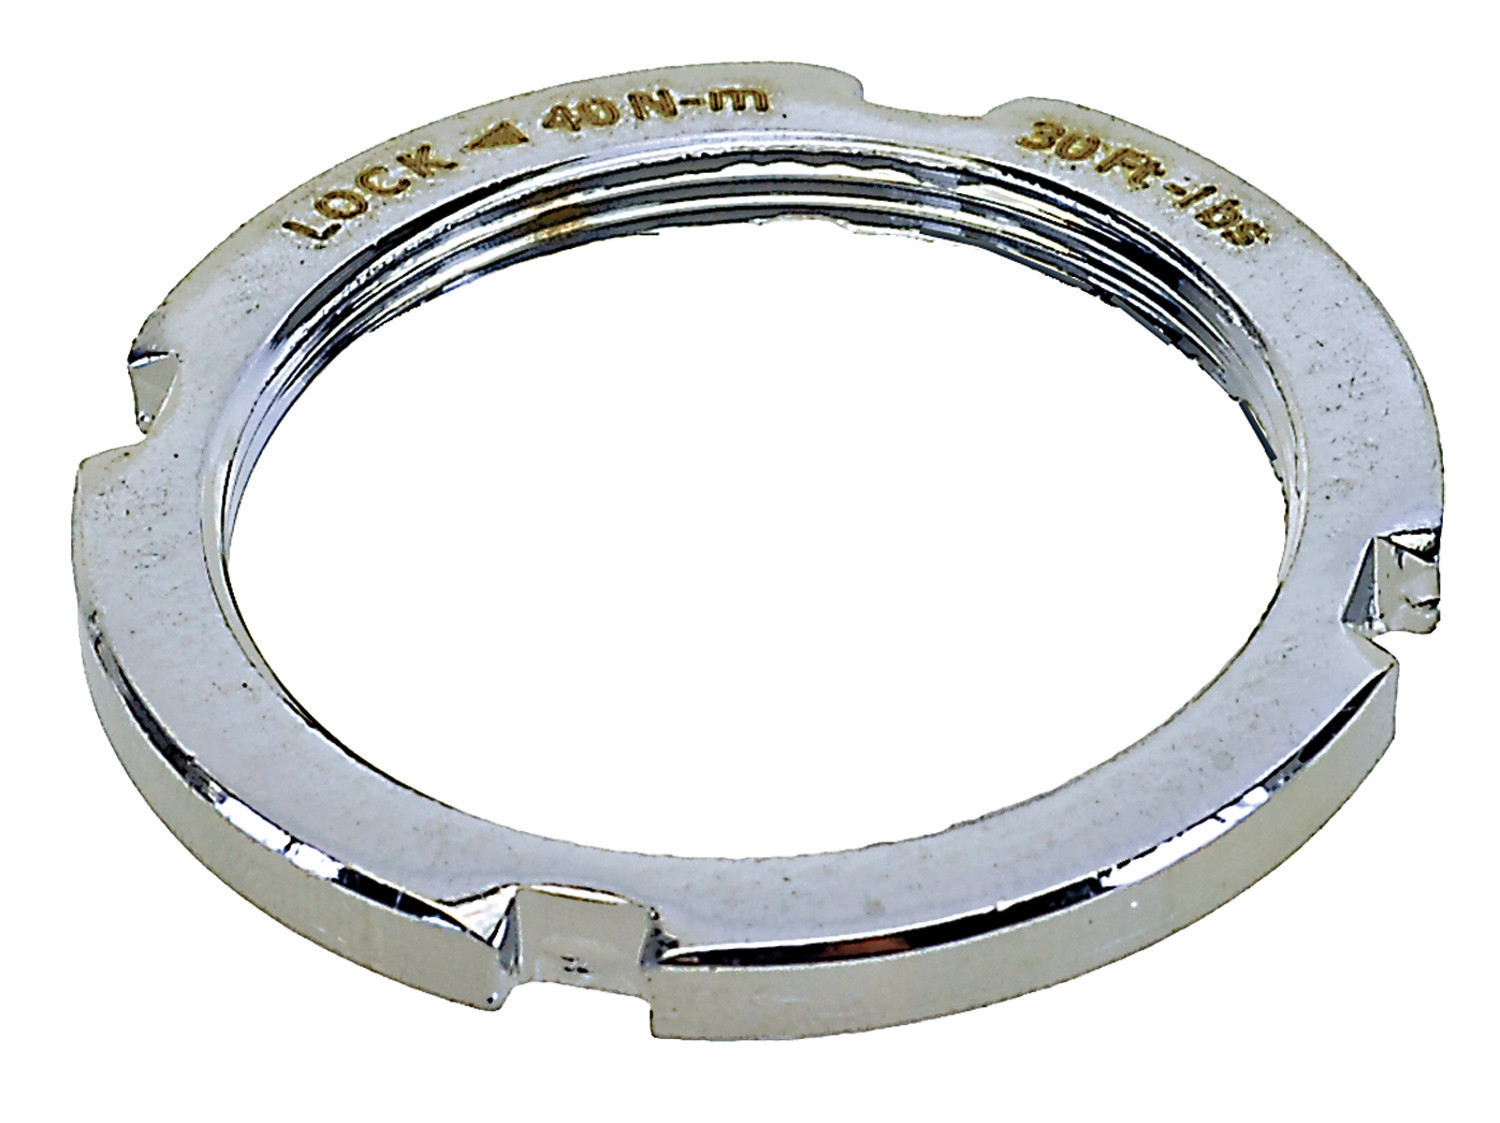  Axle Lock Ring For Rear Hub Suit 325711 Hub  Axle Lock Ring For Rear Hub Suit 325711 Hub